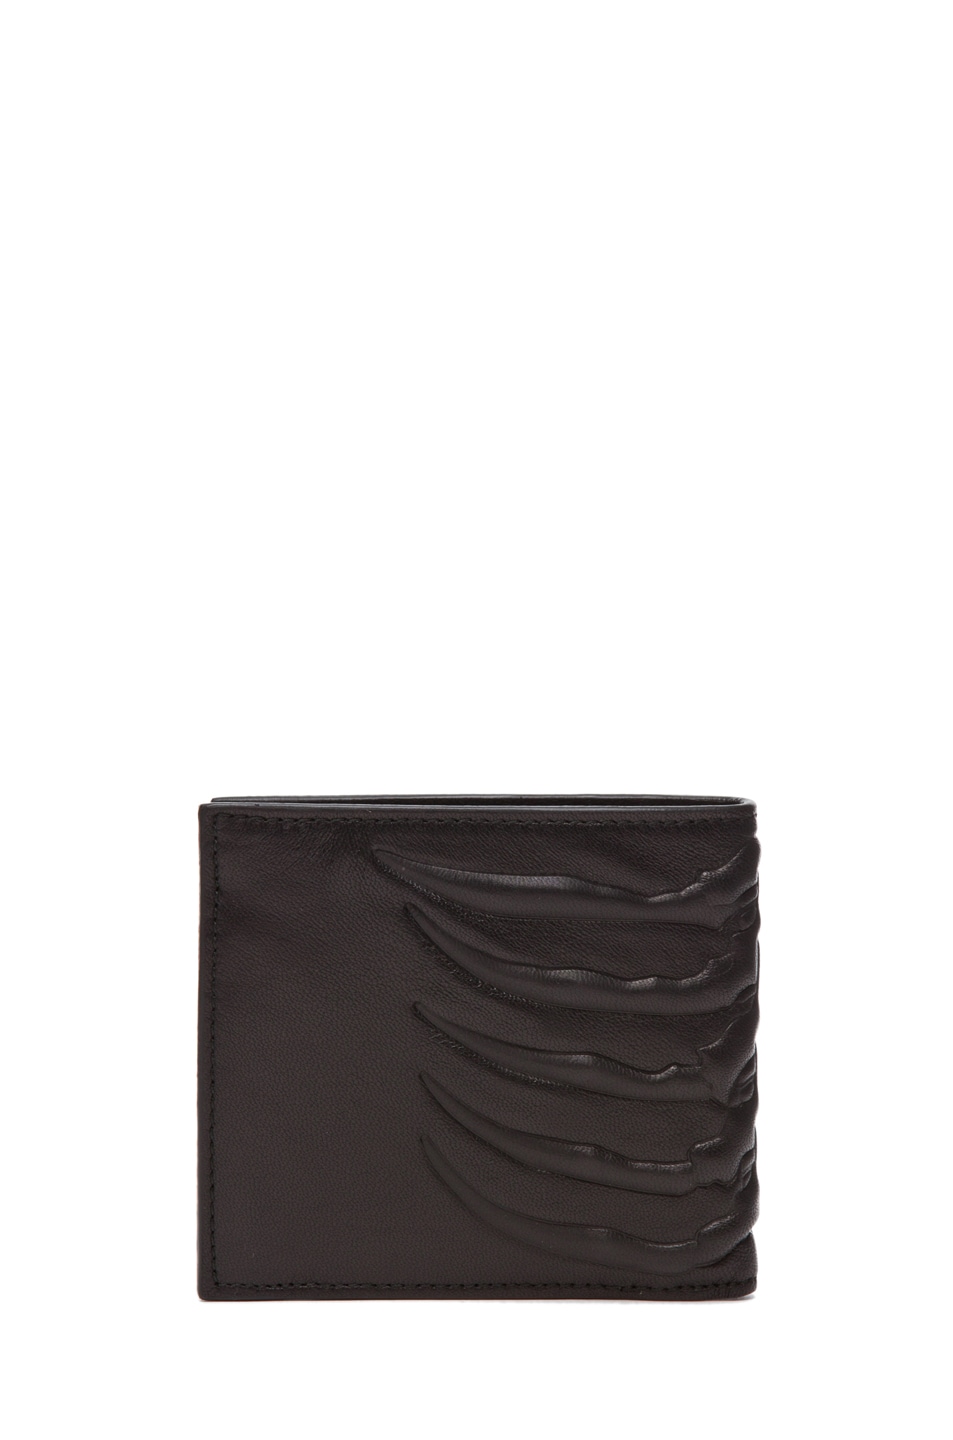 Alexander McQueen Ribcage Wallet in Black | FWRD